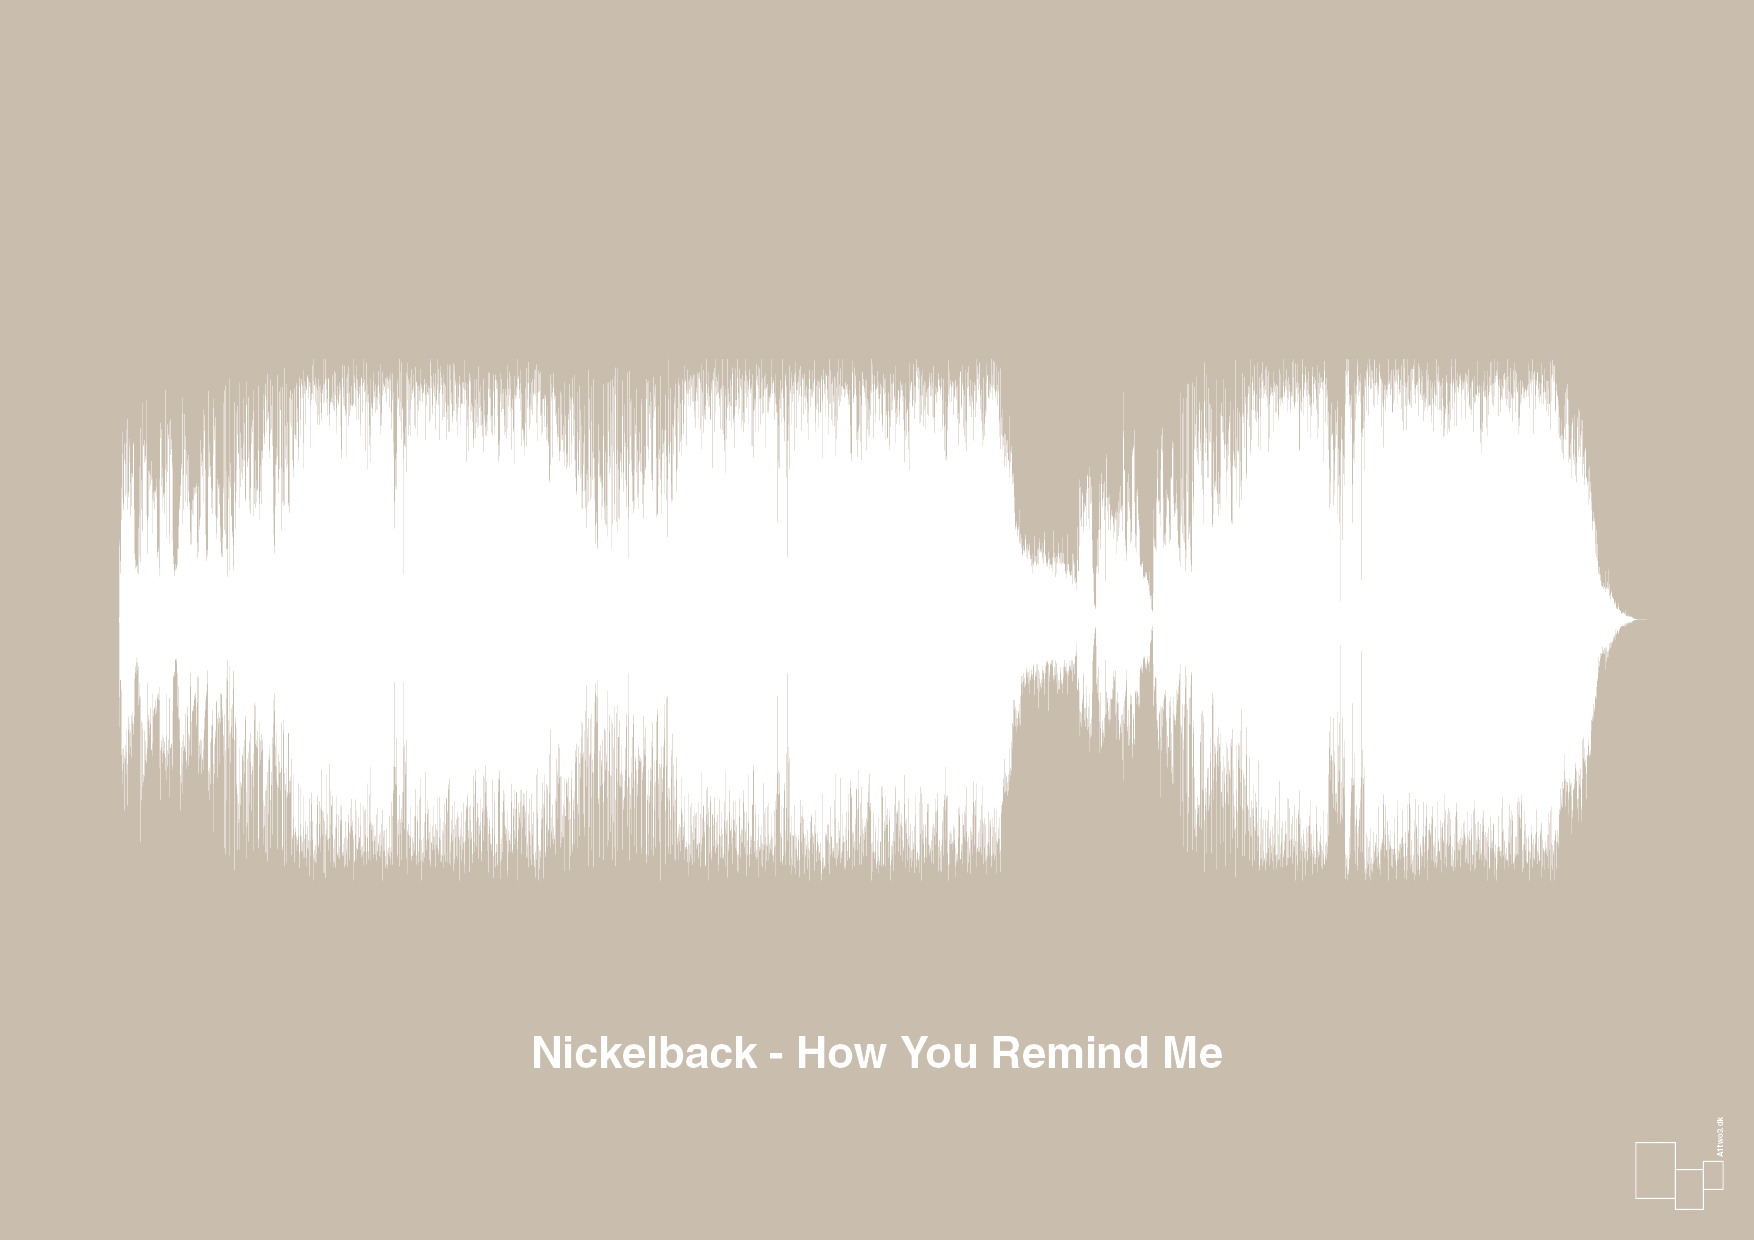 nickelback - how you remind me - Plakat med Musik i Creamy Mushroom